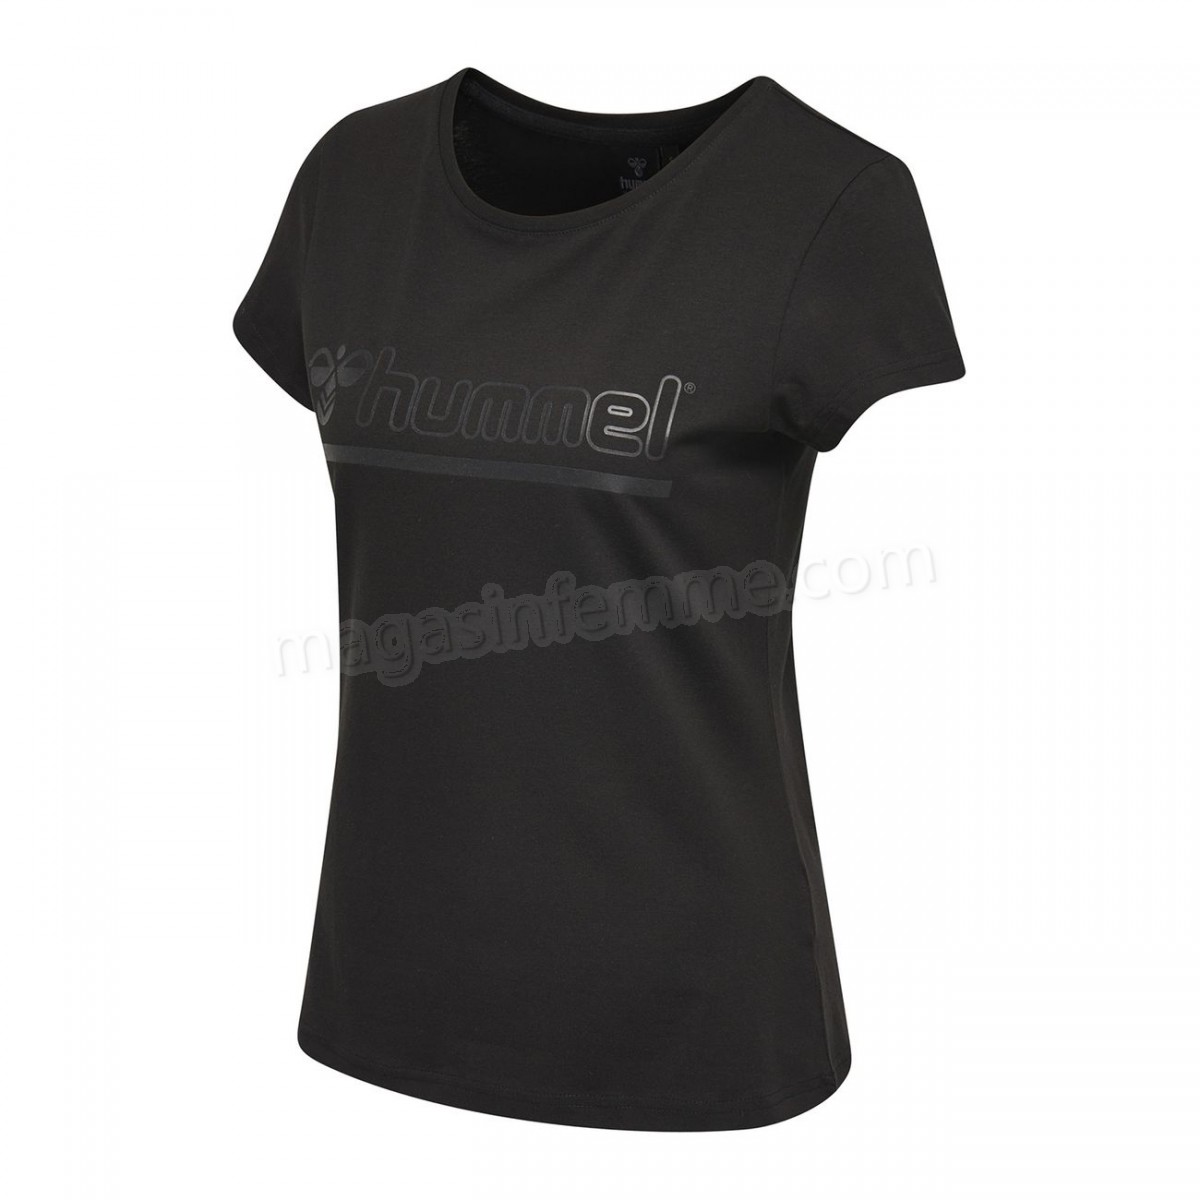 Hummel-Fitness femme HUMMEL T-shirt femme Hummel Classic bee Perla en solde - -2